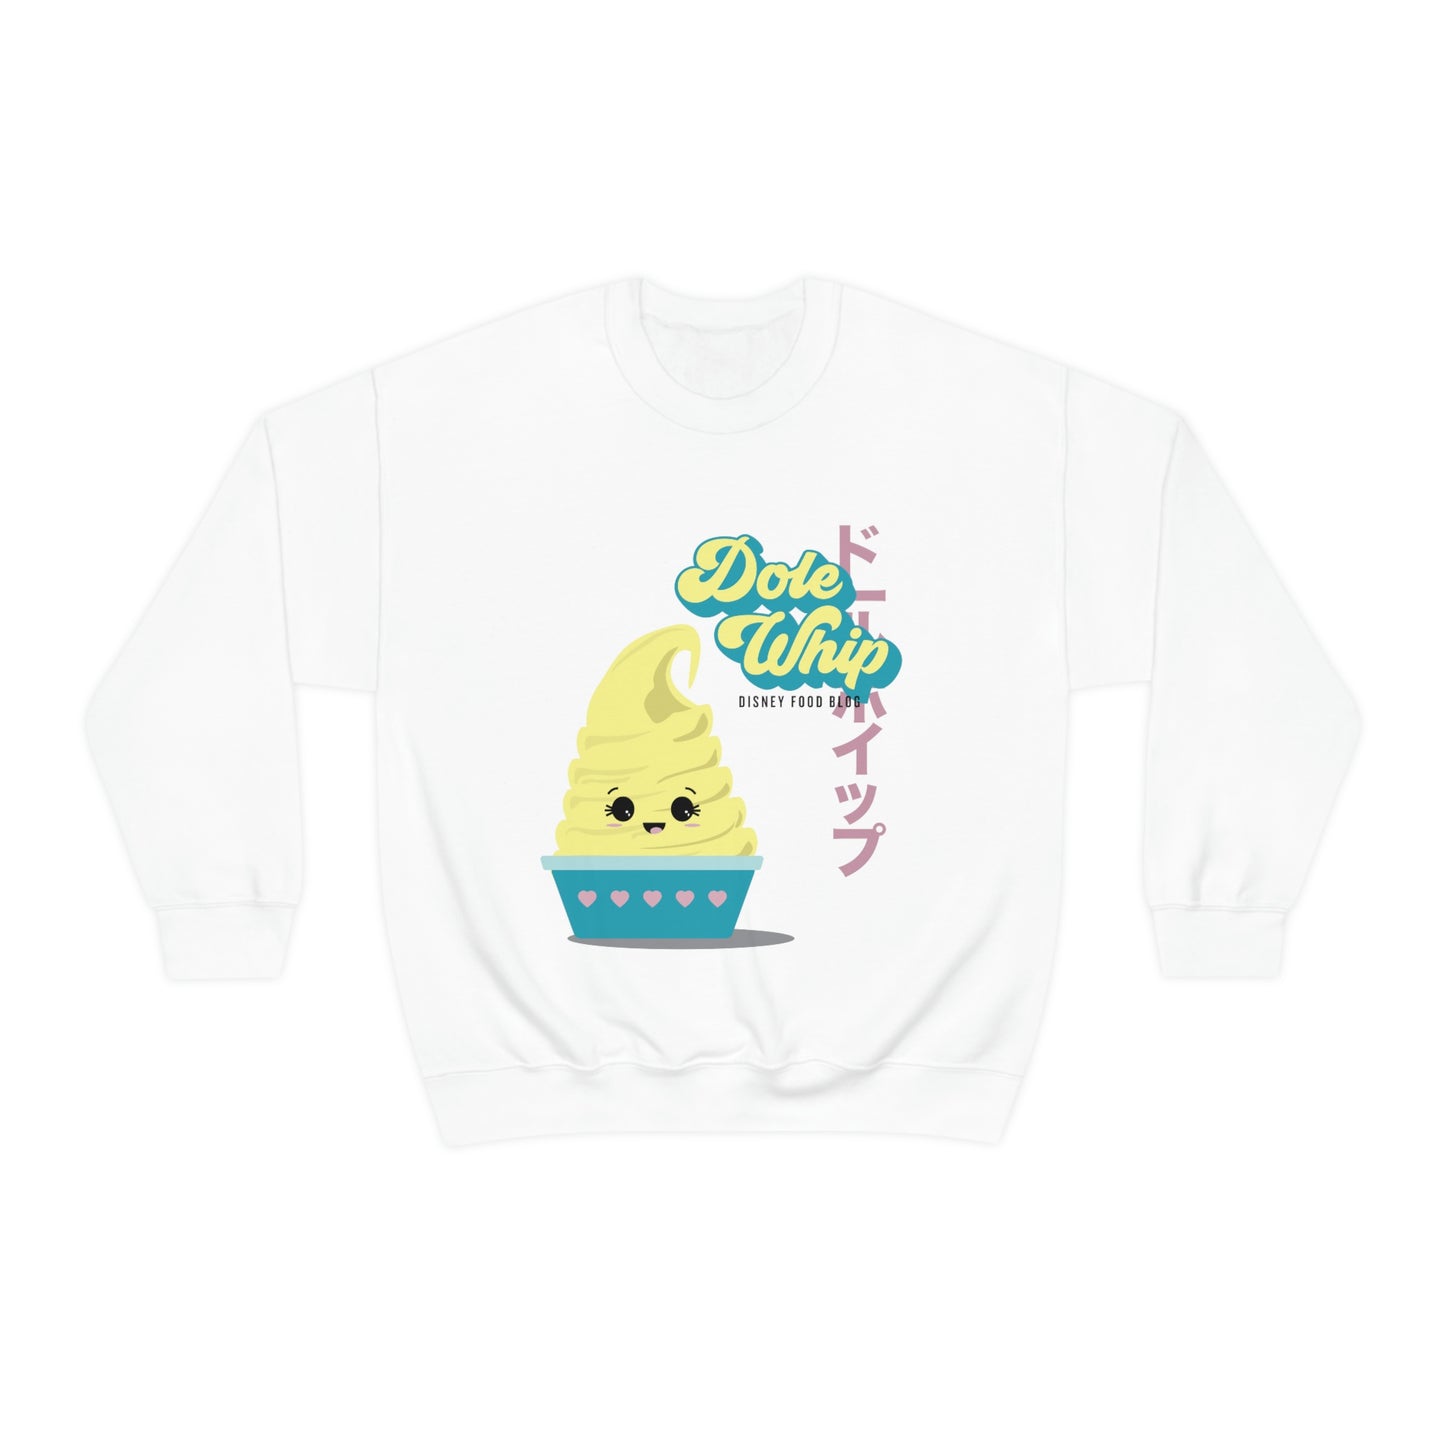 Pineapple Whip - Adult Crewneck Sweatshirt